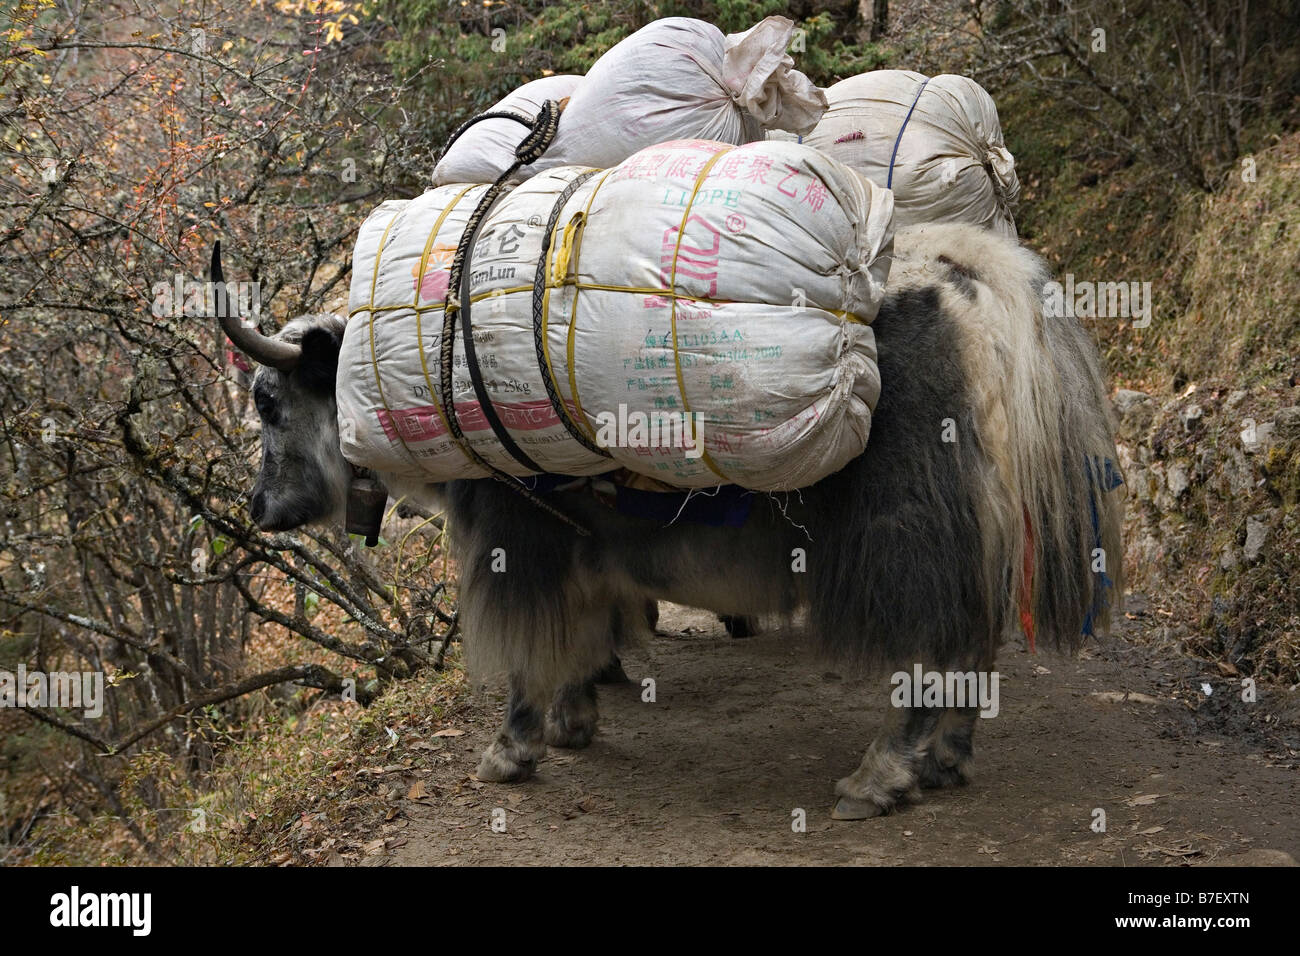 Laden yaks passing near Phurte in Sagarmatha National Park Solokhumbu region Nepal Stock Photo